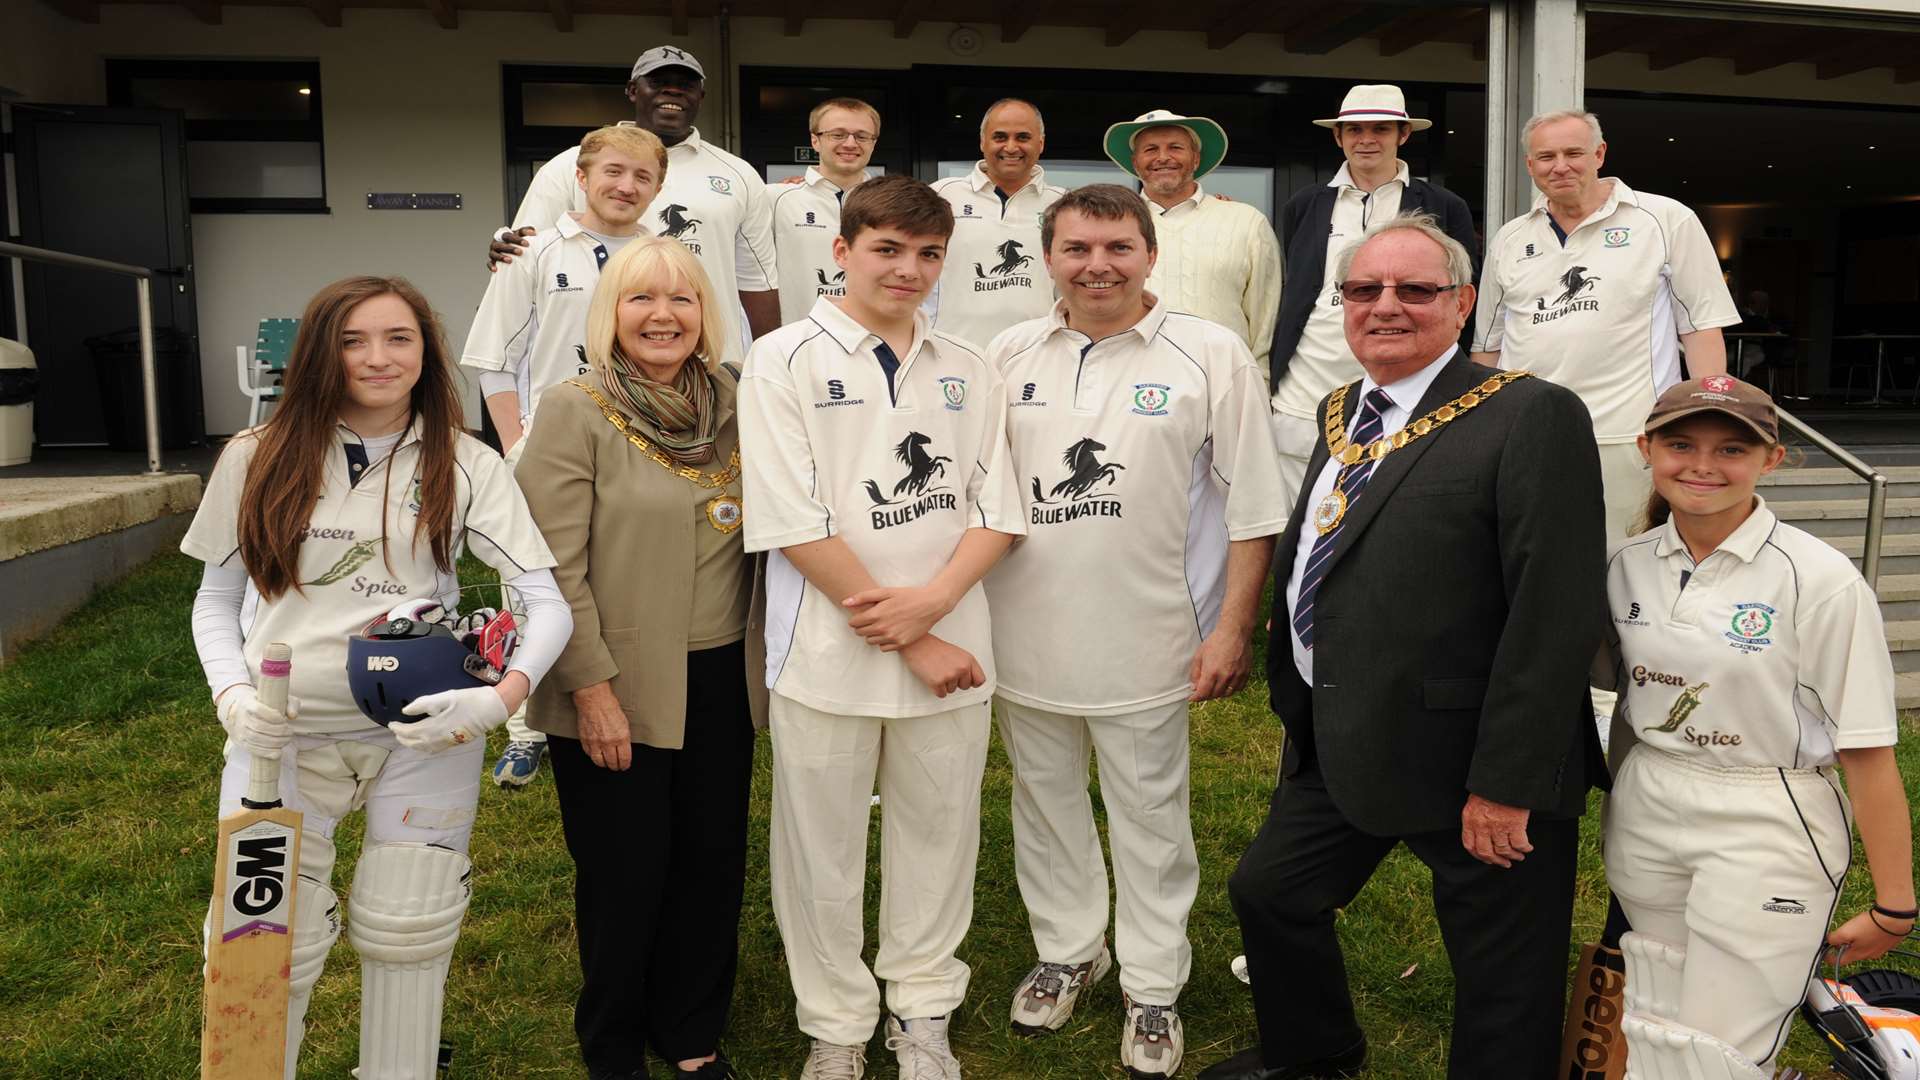 Dartford MP Gareth Johnson's annual charity cricket match. Dartford Mayor Cllr John Burrell and mayoress Eija with the team.